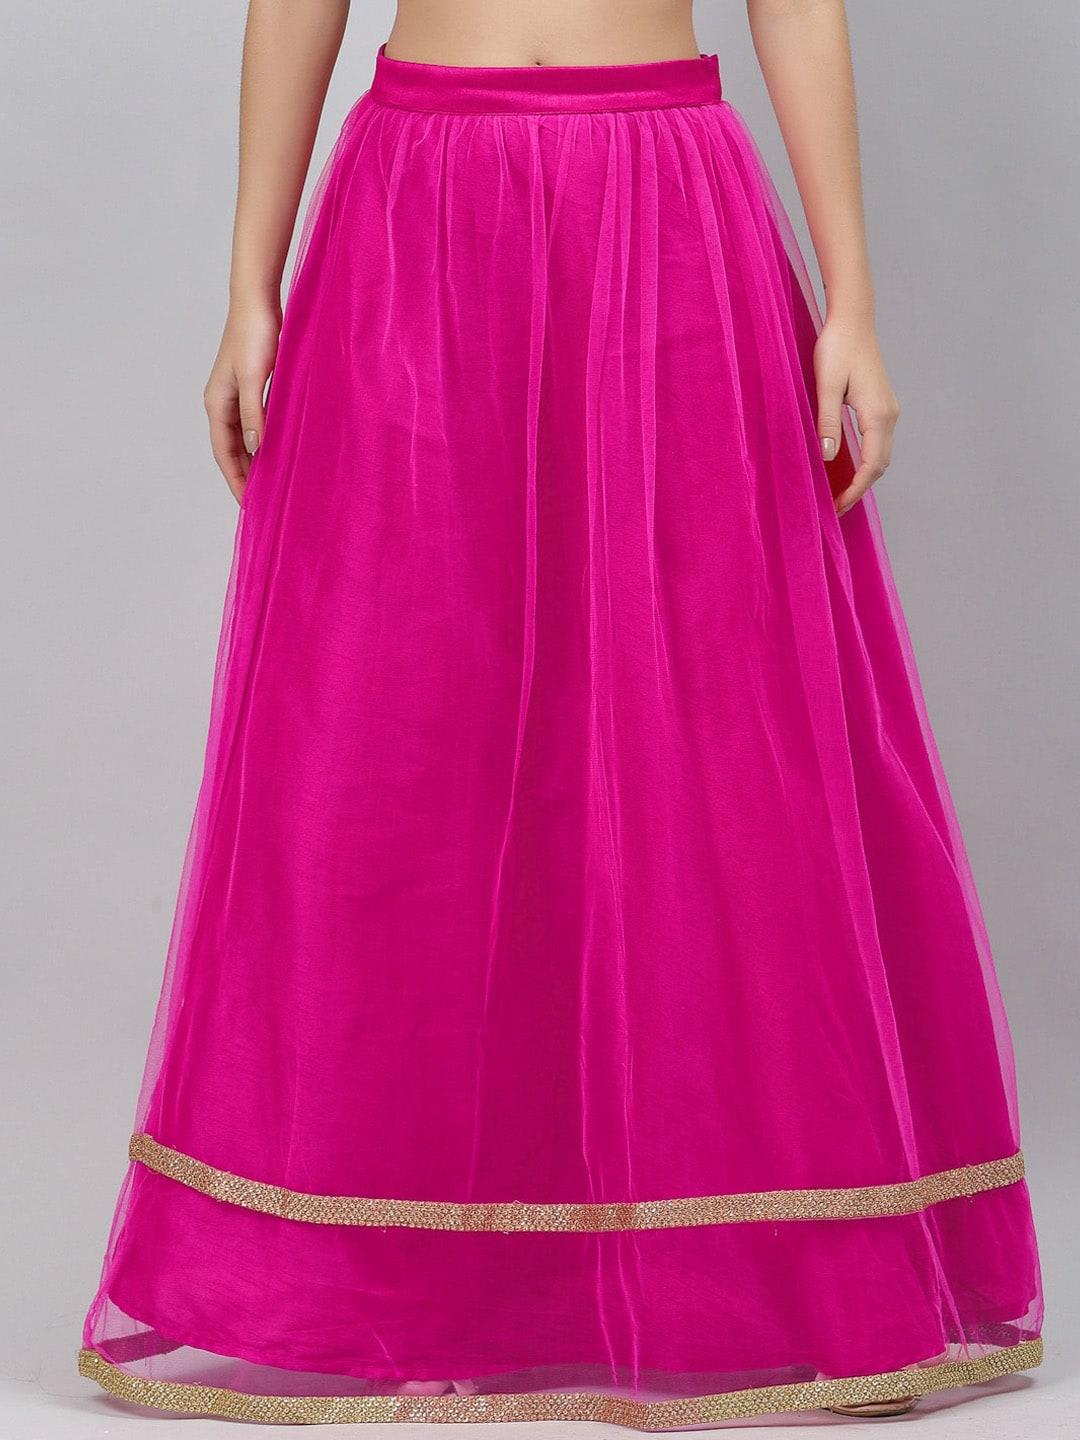 studio rasa Women Magenta Pink & Gold-Colored Flared Net Sequin Embellished Maxi Skirt